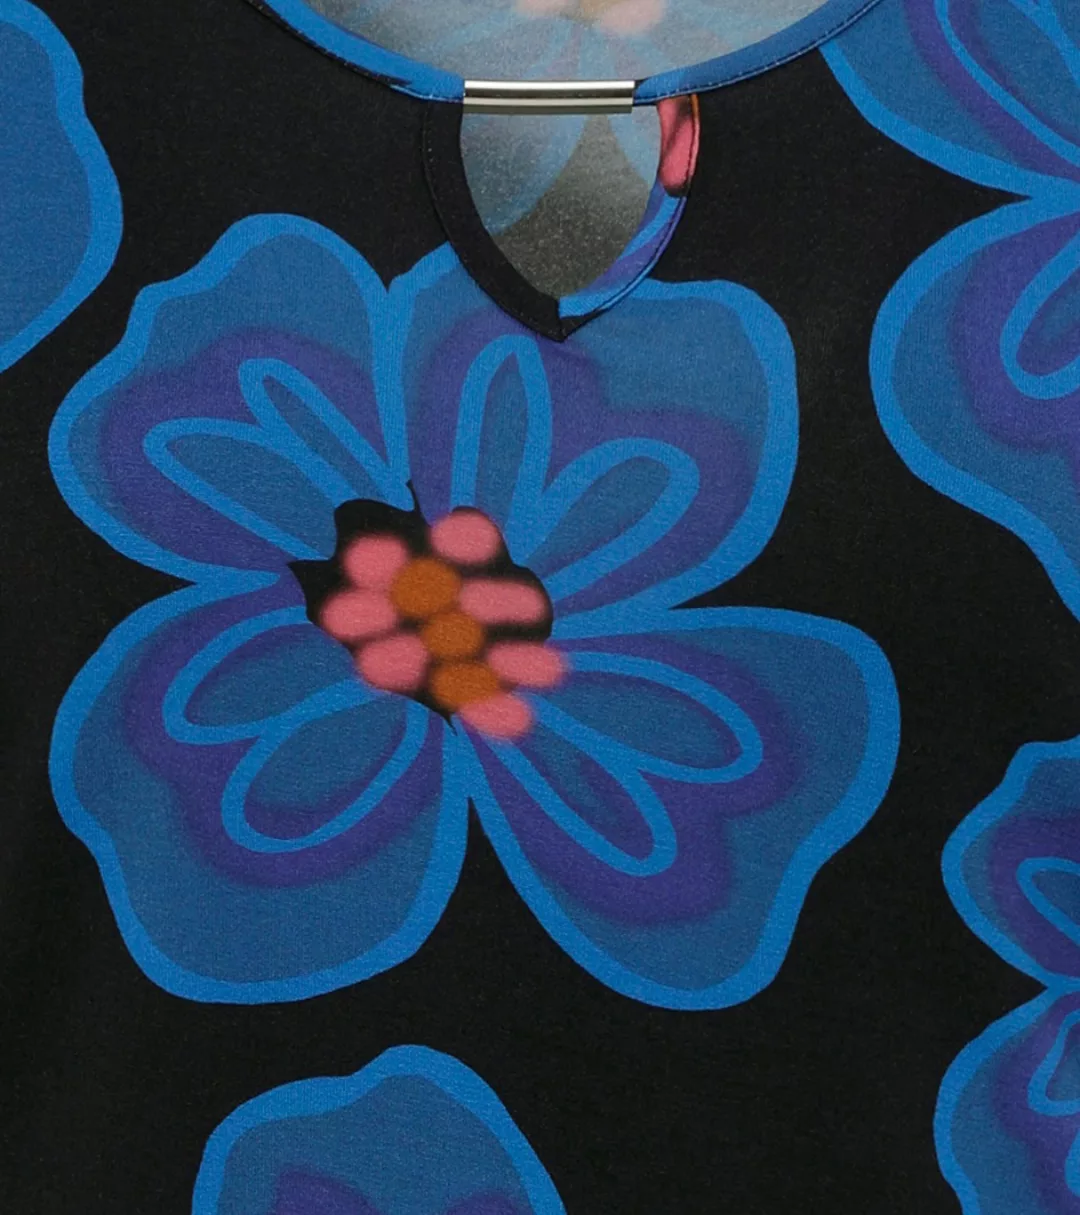 Aniston SELECTED Langarmshirt, mit plakativem Blütendruck - NEUE KOLLEKTION günstig online kaufen